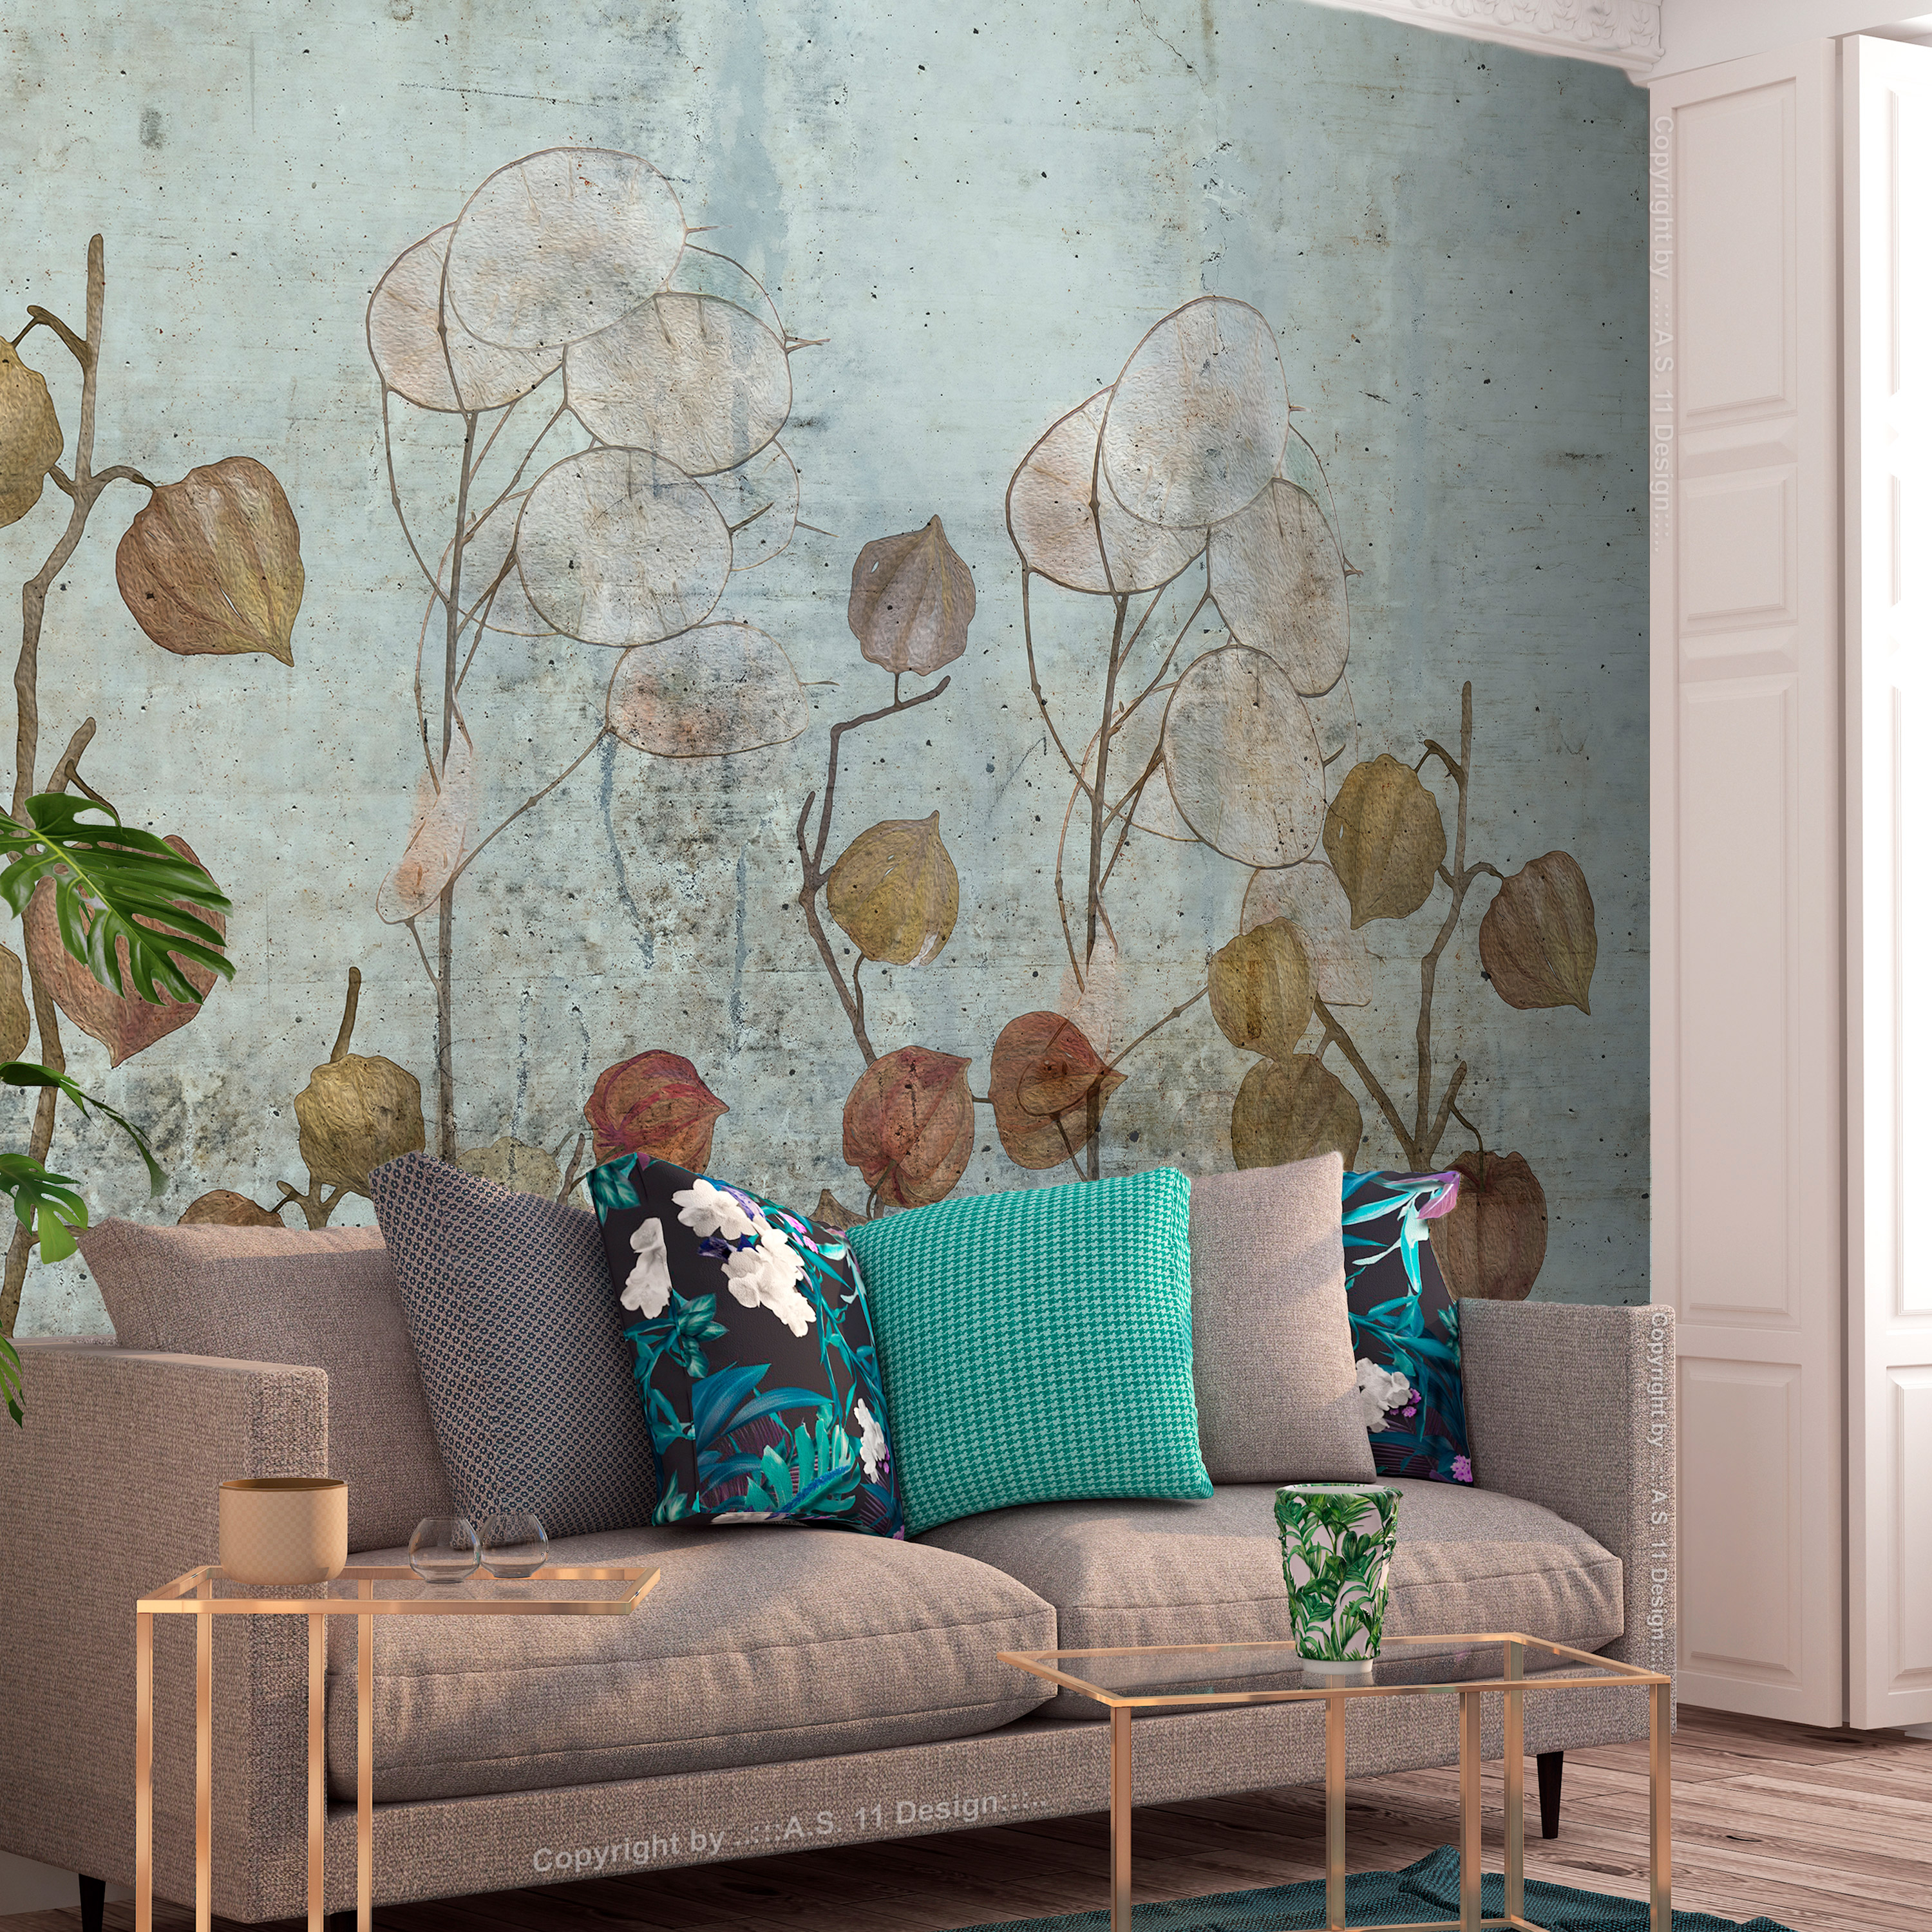 Self-adhesive Wallpaper - Painted Lunaria - 98x70